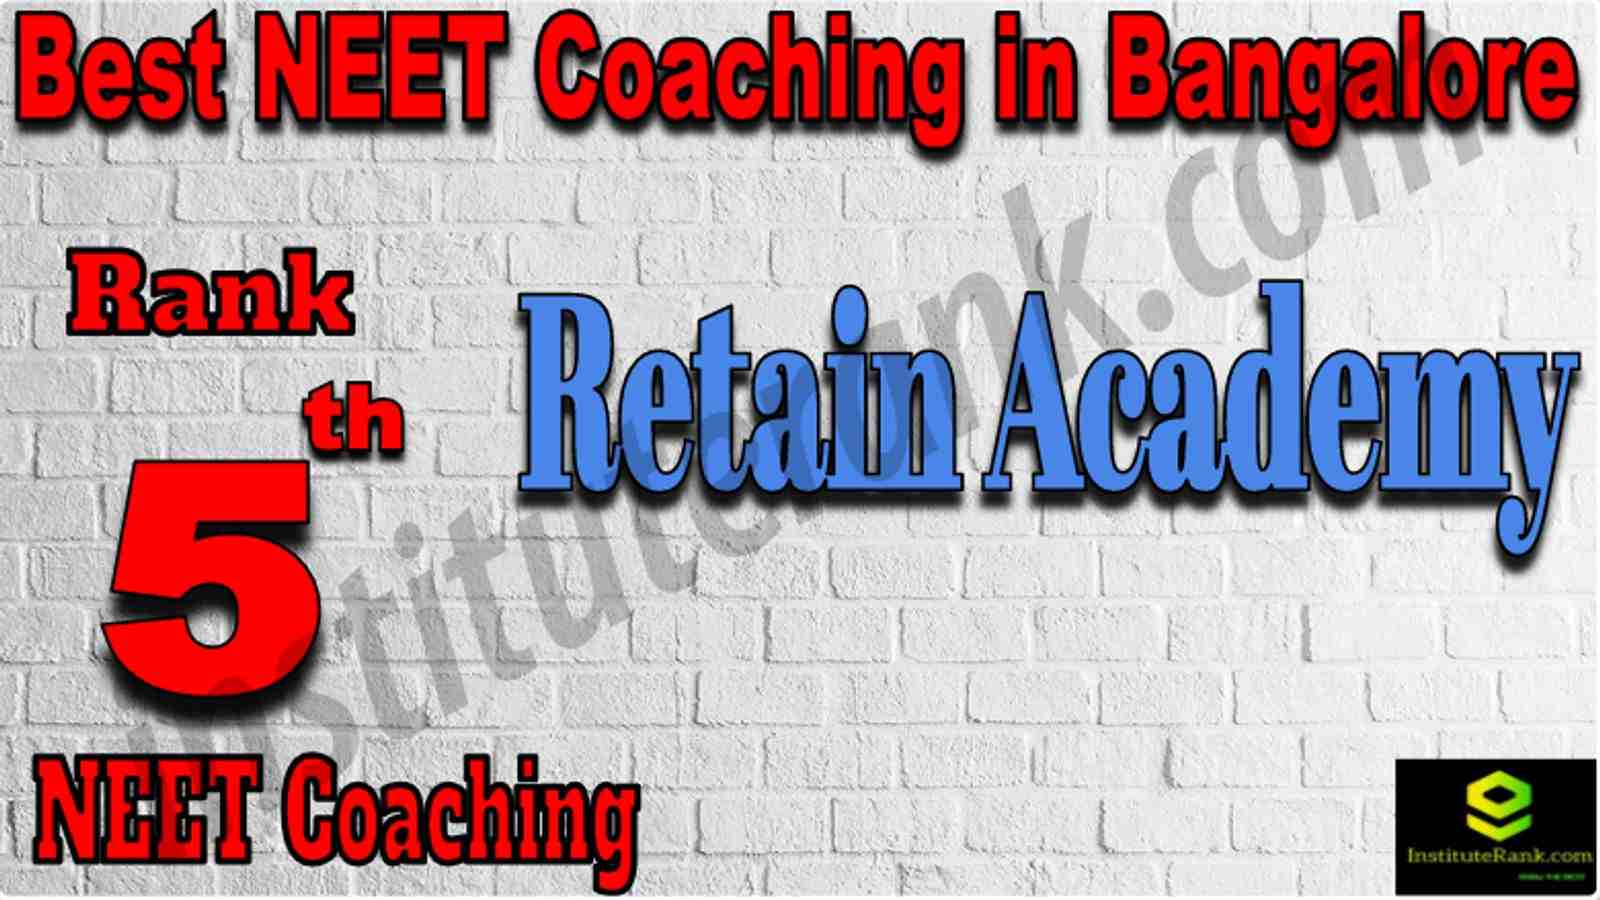 Rank 5 Best NEET Coaching in Bangalore